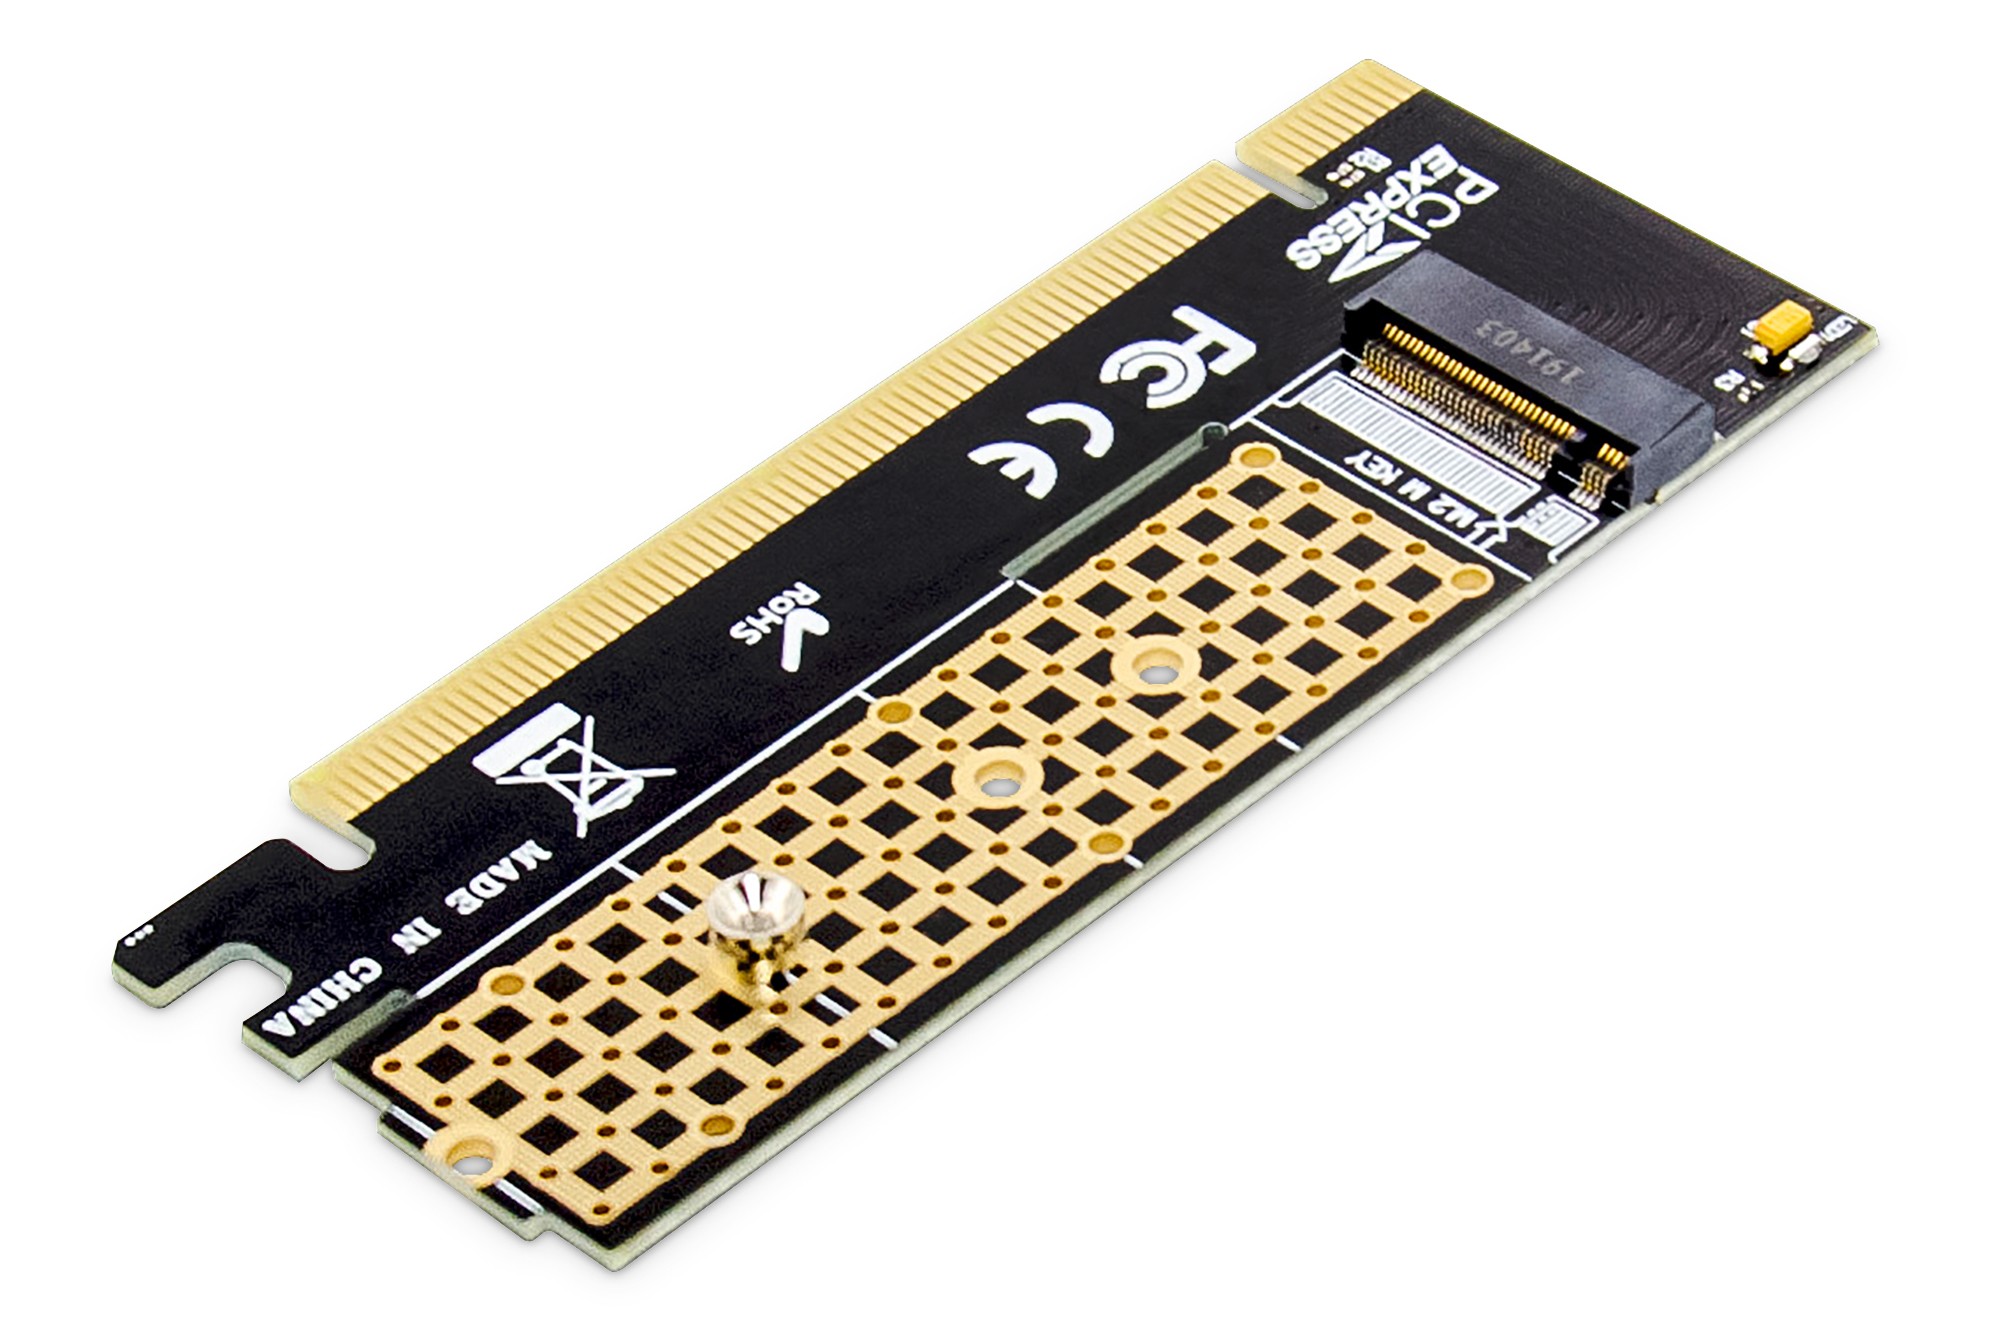 DS-33171  Tarjeta Add-On M.2 NVMe SSD PCIexpress x16 compatible con M Key, tamaño 80, 60, 42 y 30 mm